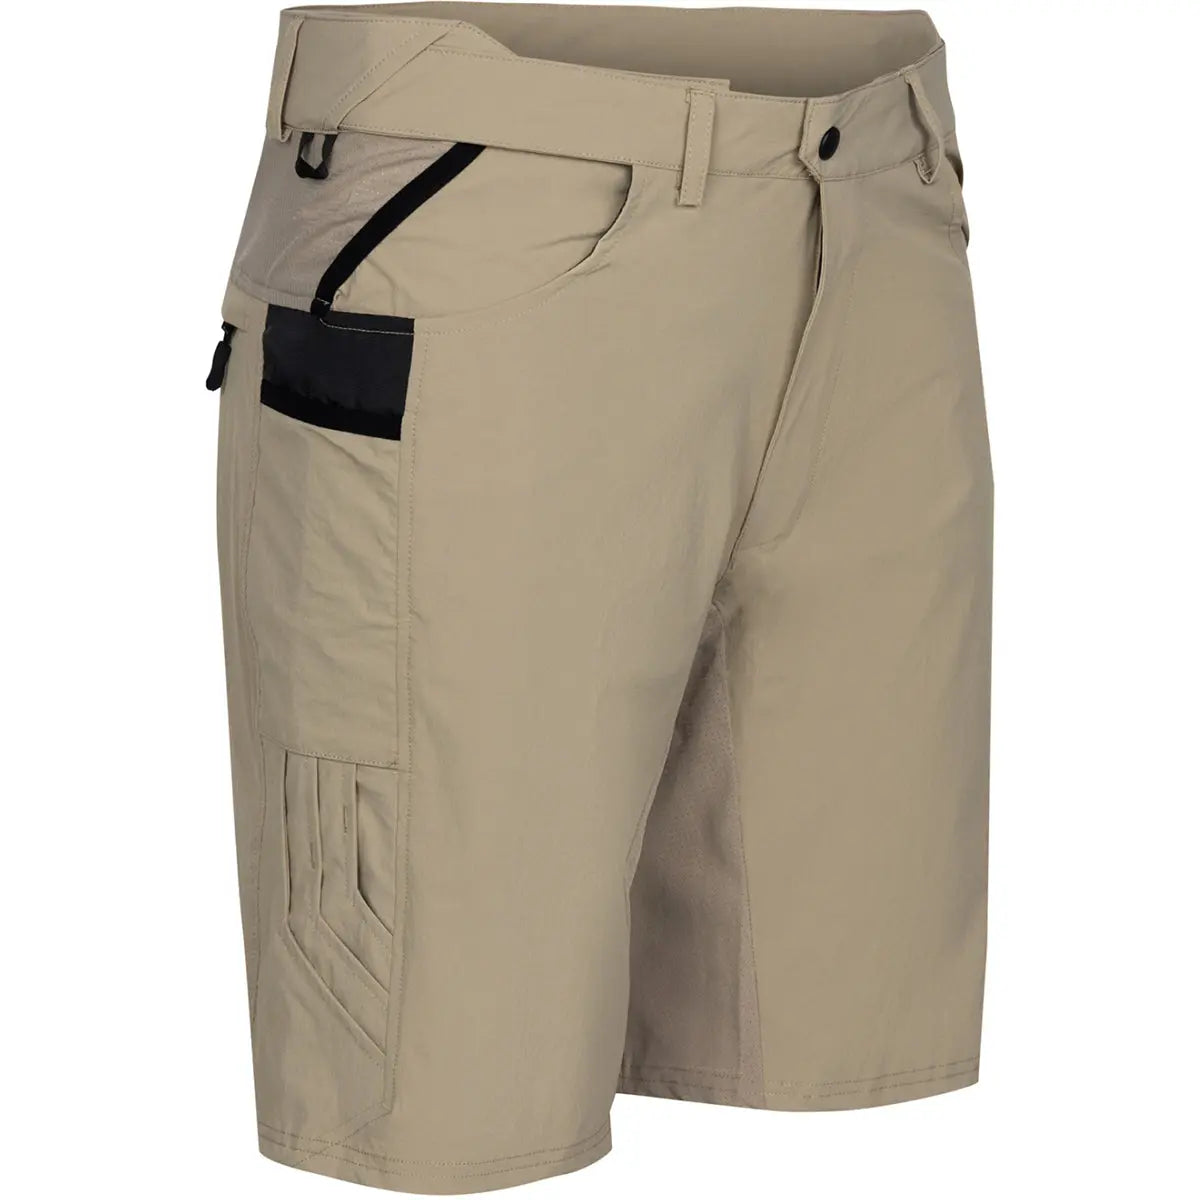 Gillz Pro Series 9" Shorts - Dune Gillz